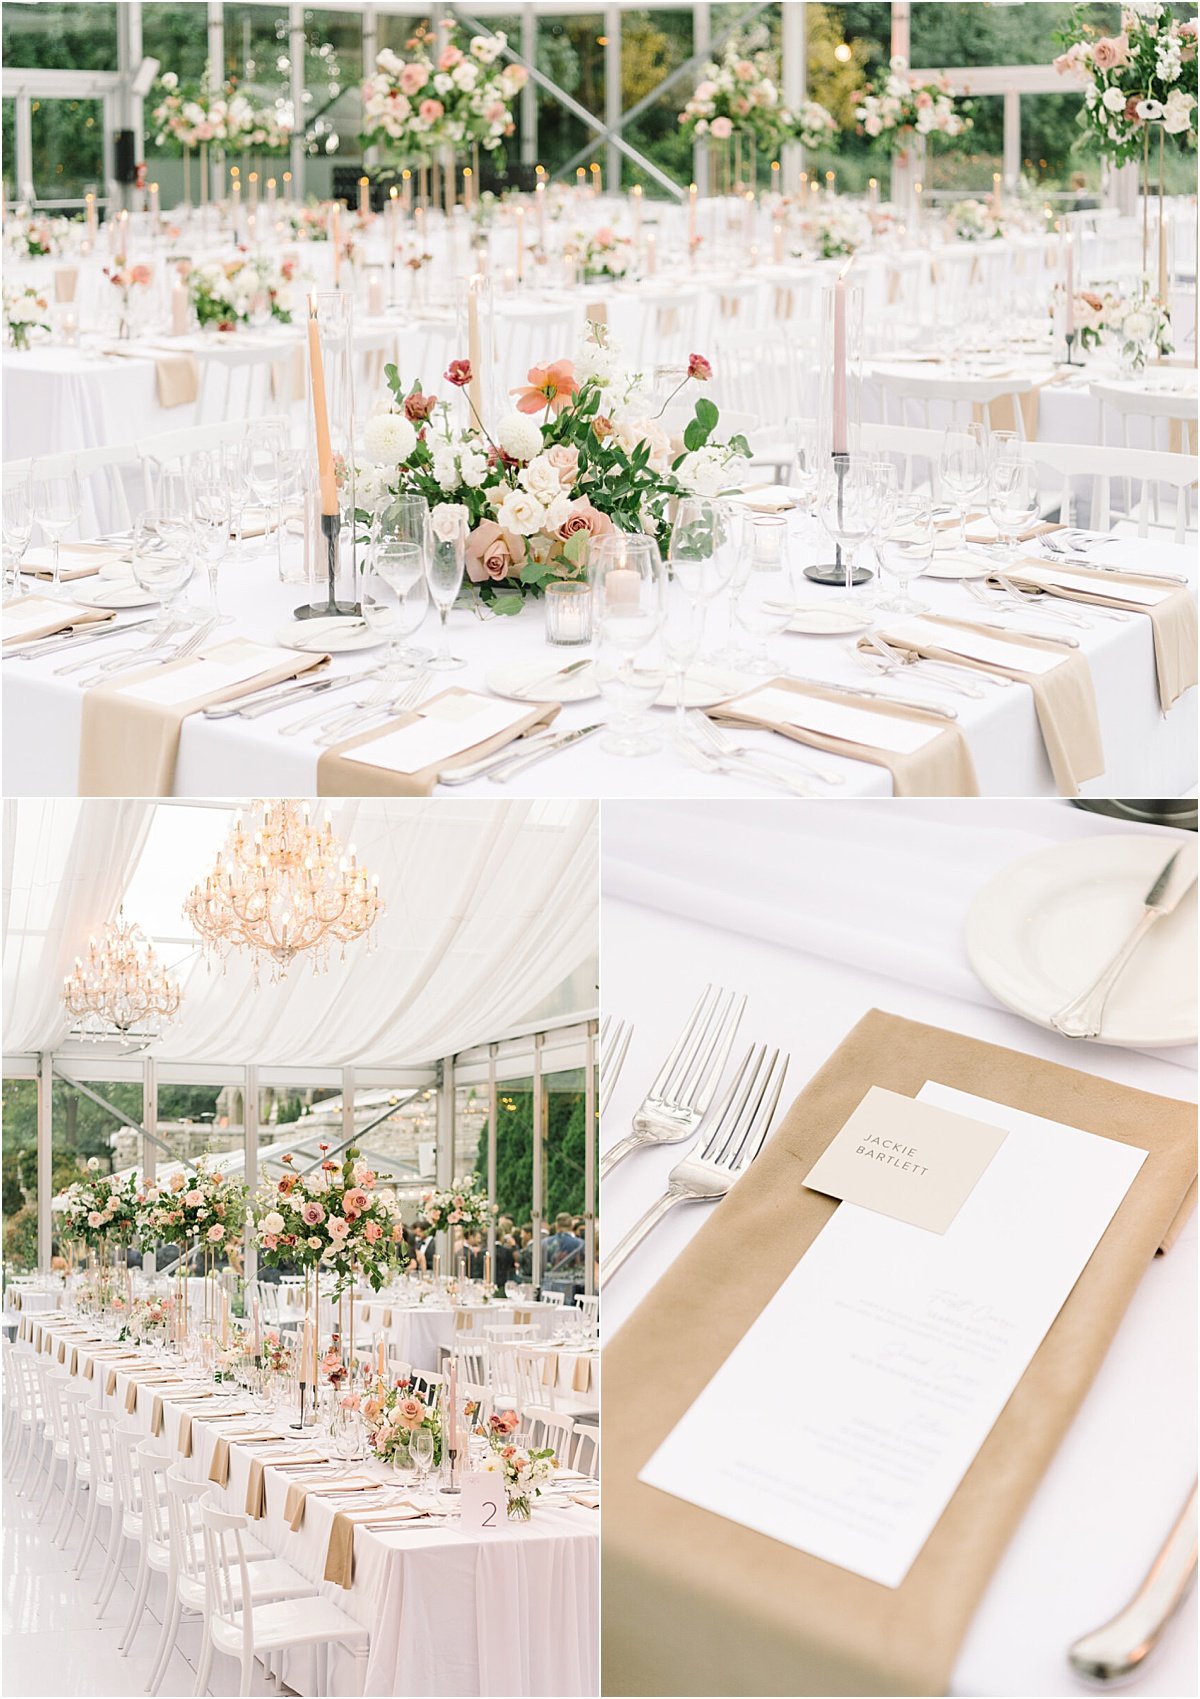 Casa-Loma-Glass-Pavilion-Wedding-Toronto-Planner-Laura-Olsen-Events-23.jpg